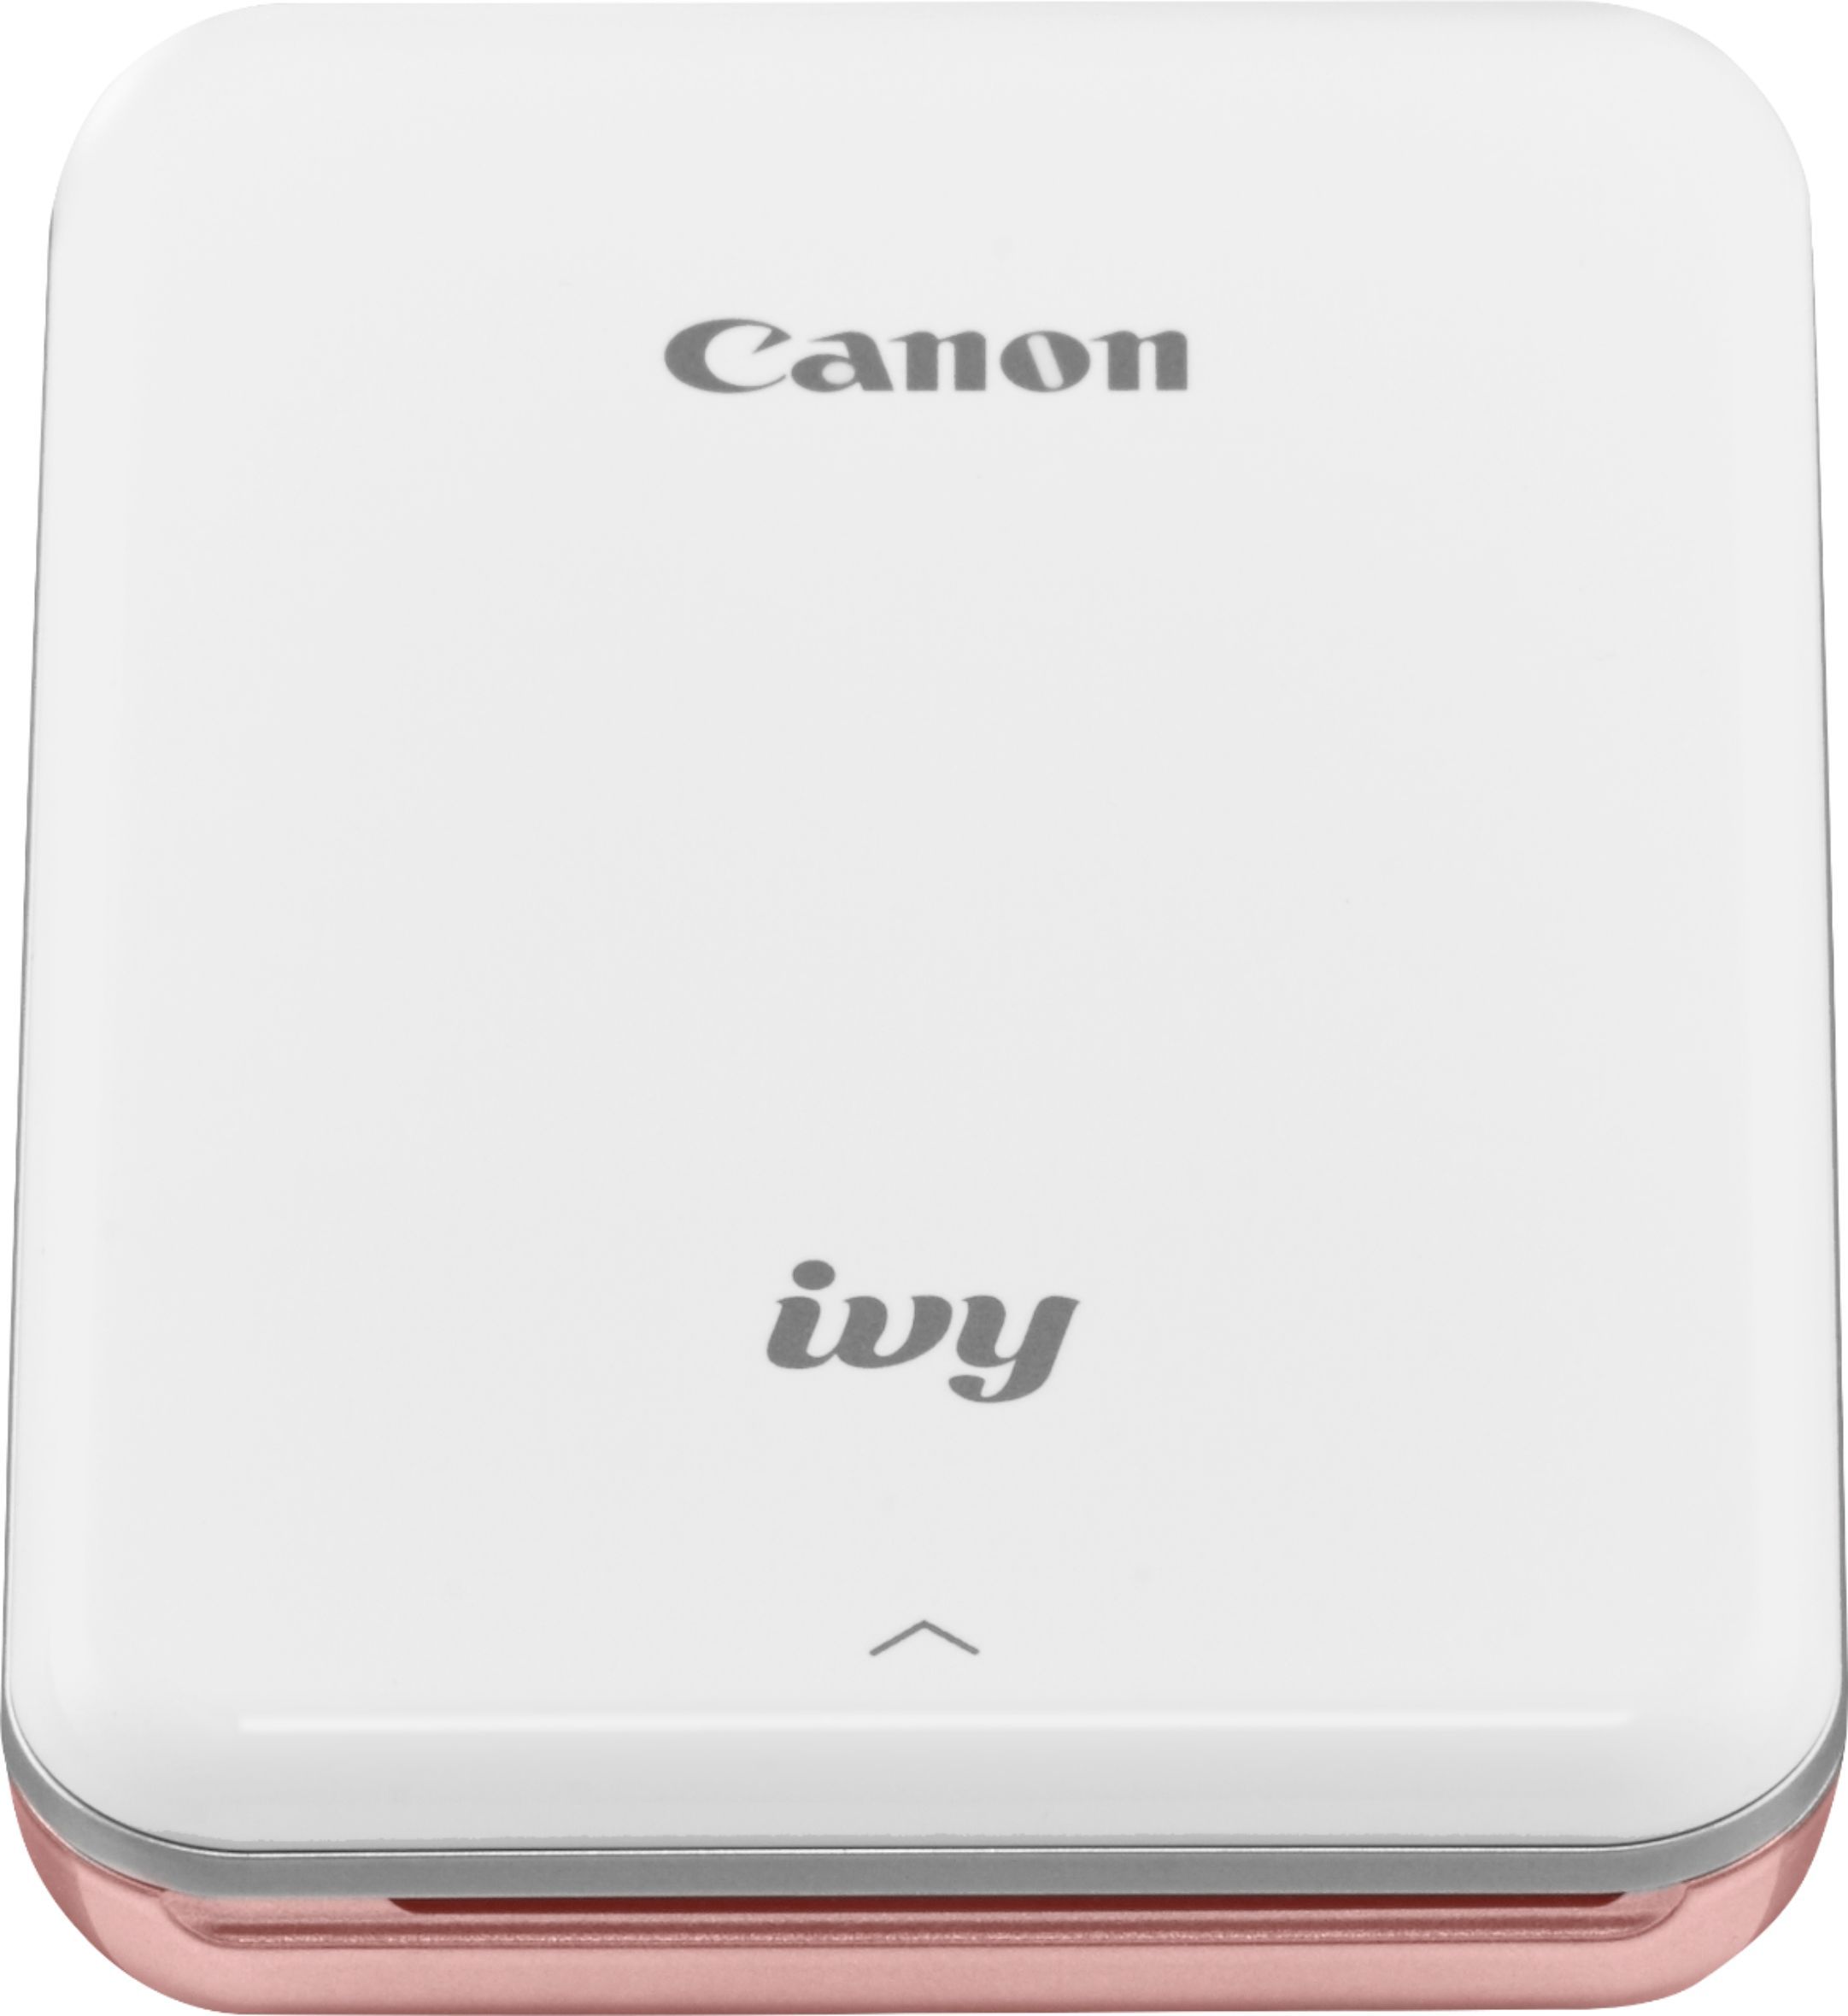 Canon IVY Mini Photo Printer Rose Gold 3204C001 - Best Buy | Best Buy U.S.